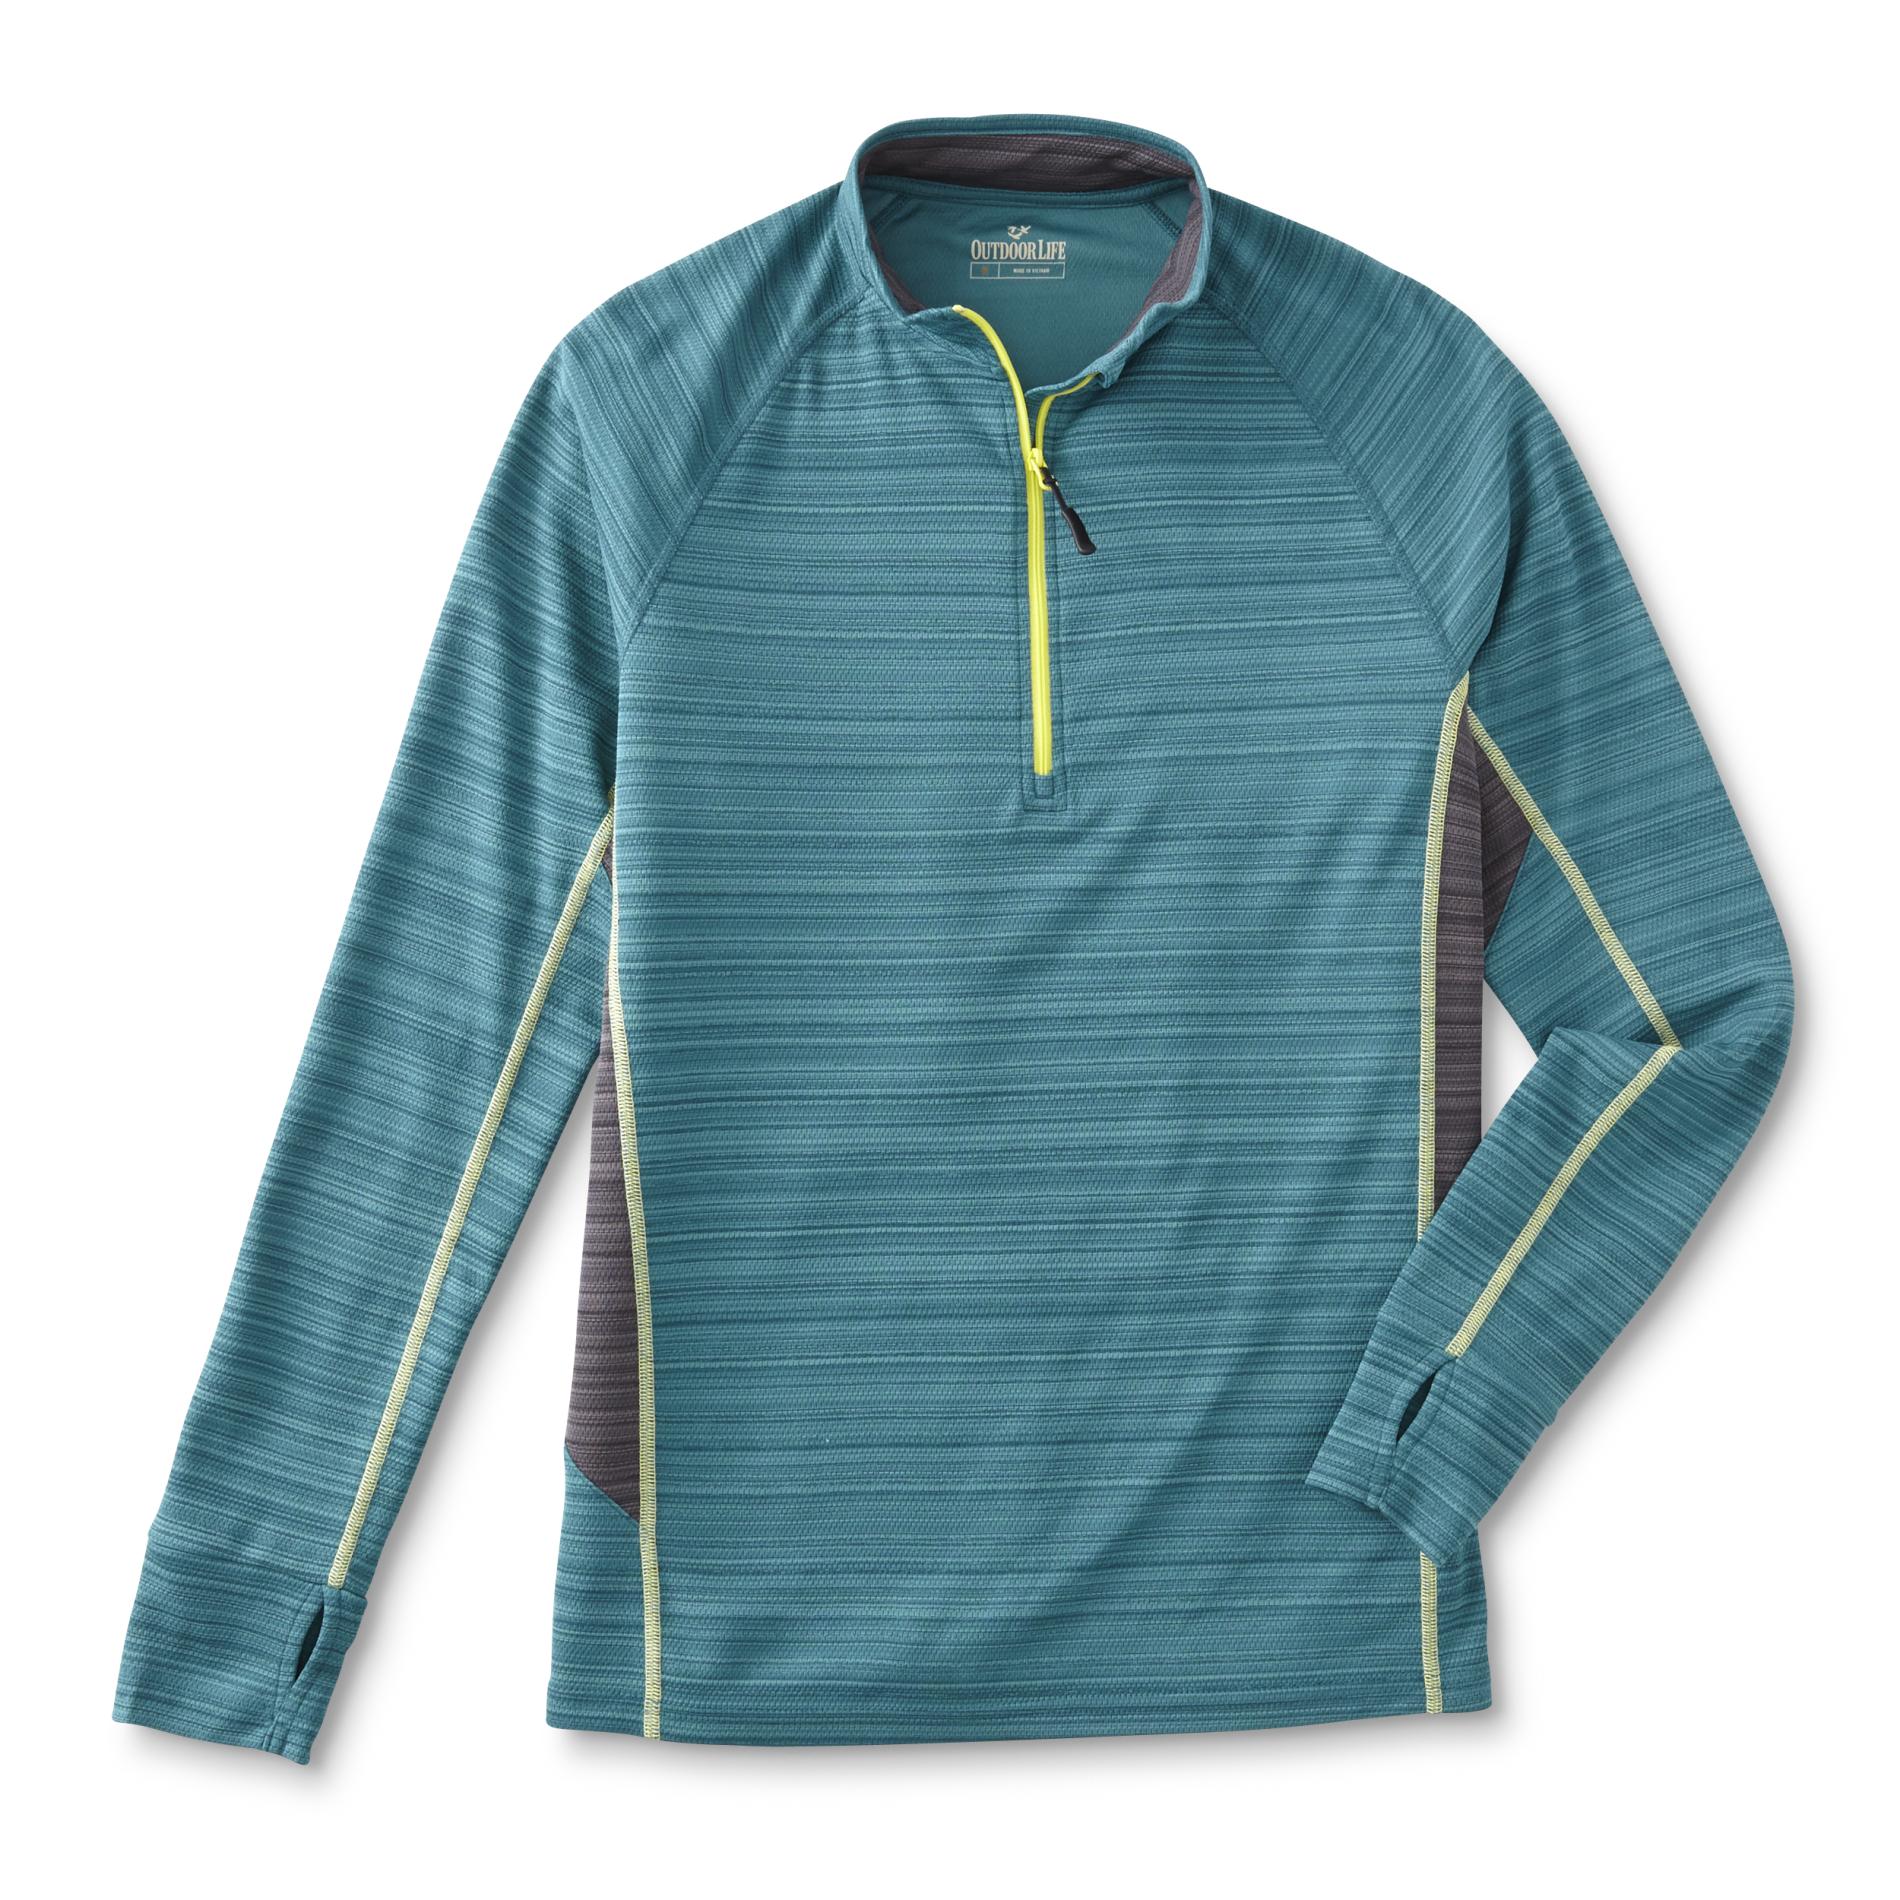 Outdoor Life Men's Quarter-Zip Athletic Shirt - Colorblock